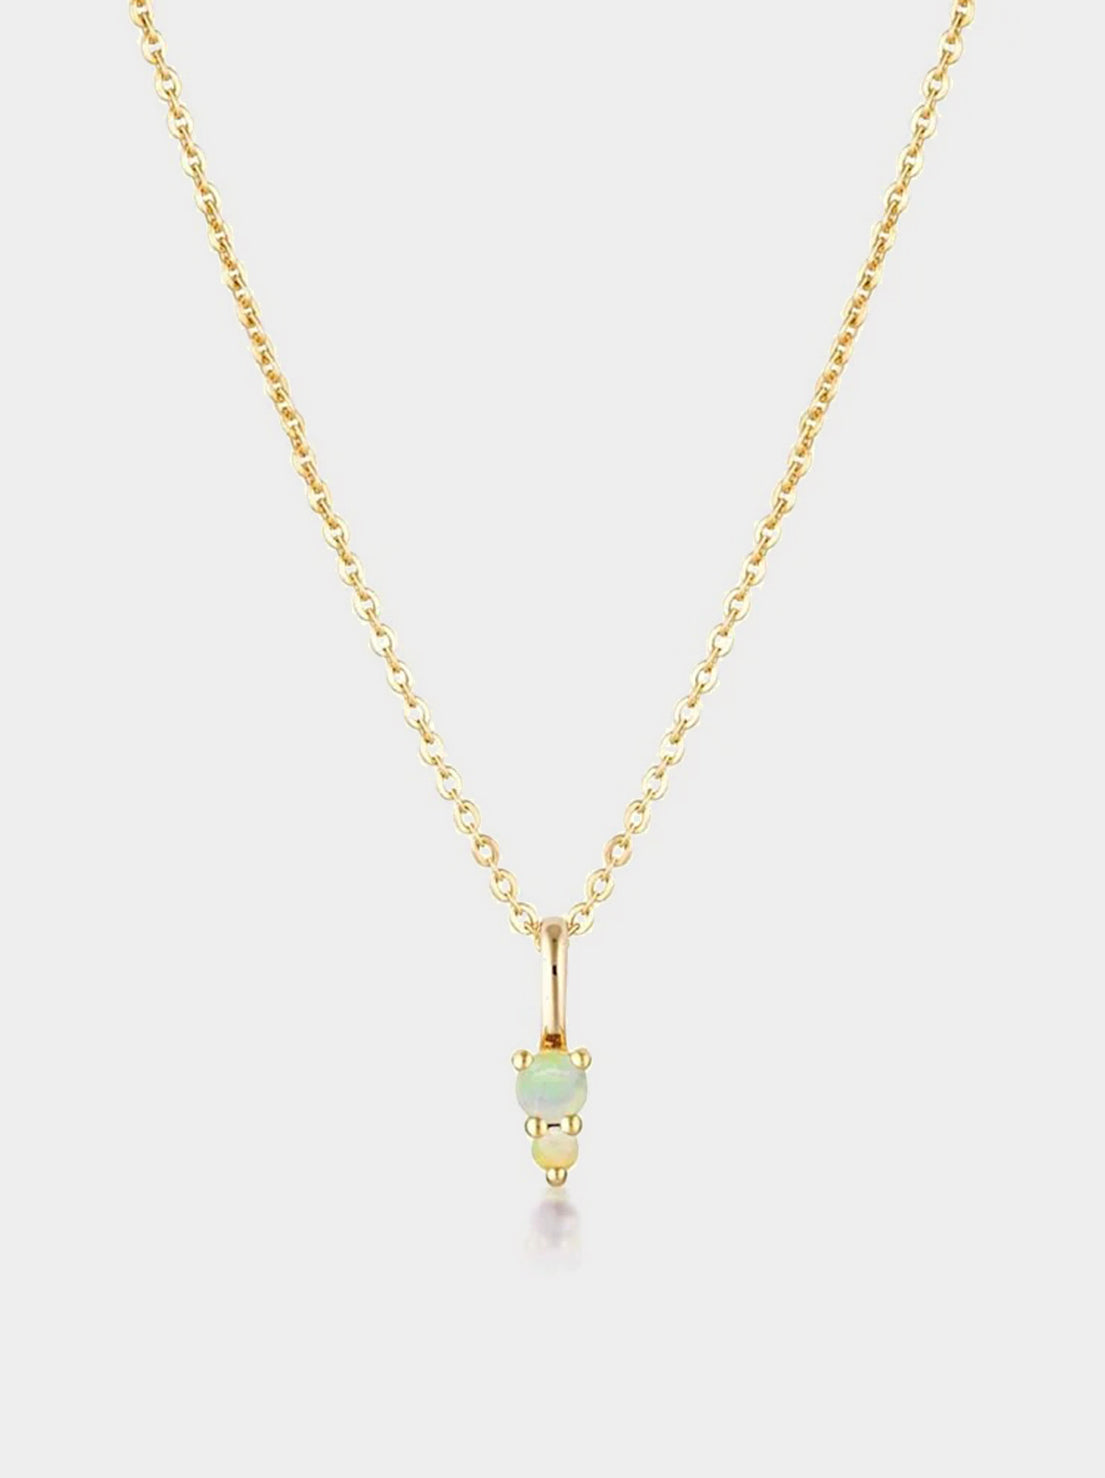 Linda Tahija - Birthstone Binary Gemstone Necklace - Opal - Gold Plated